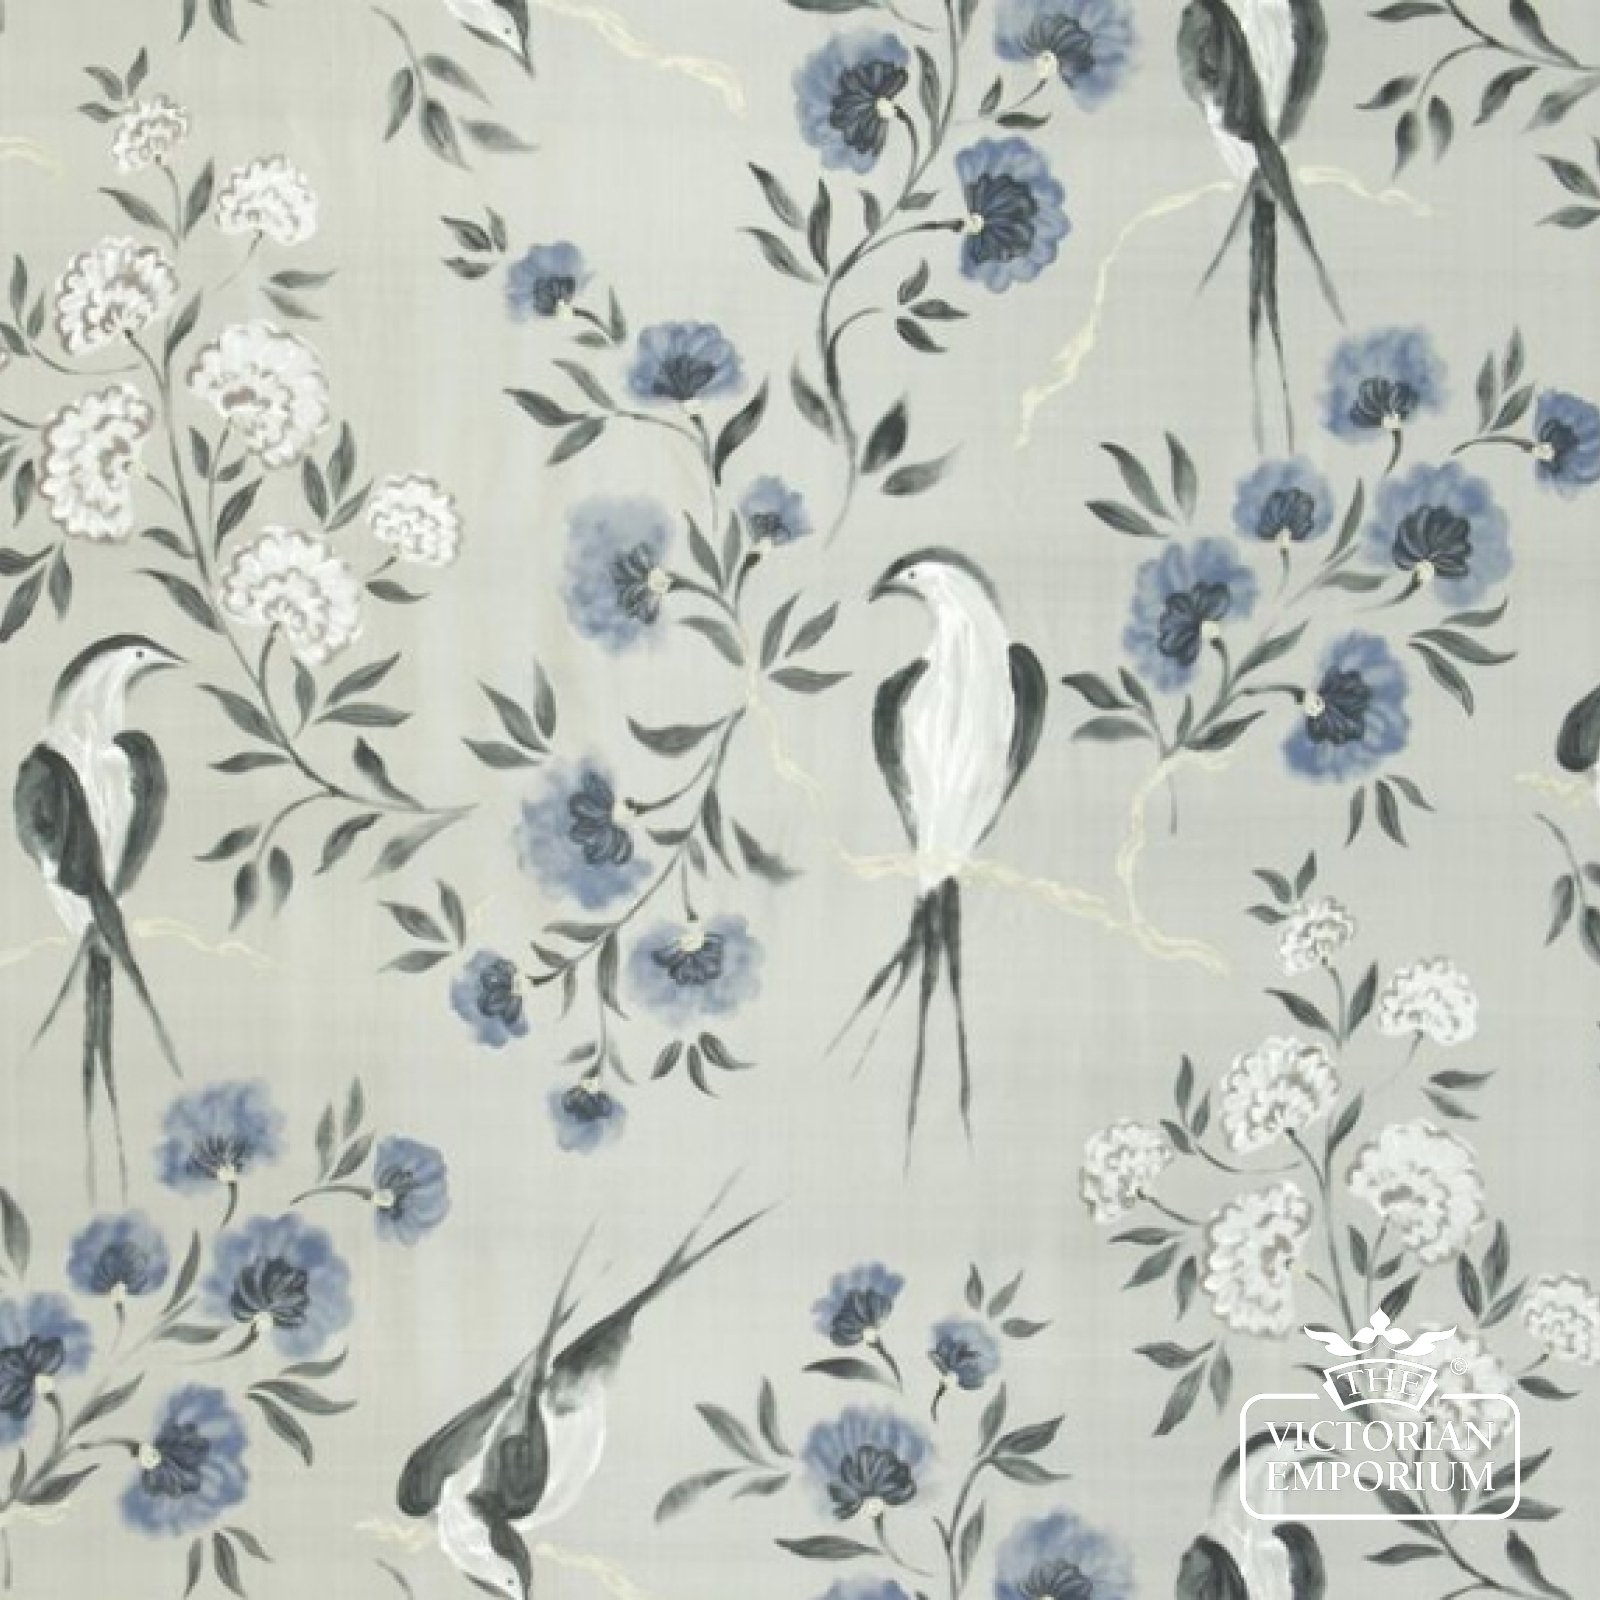 Jacaranda fabric - choice of 2 colourways - 100% Silk